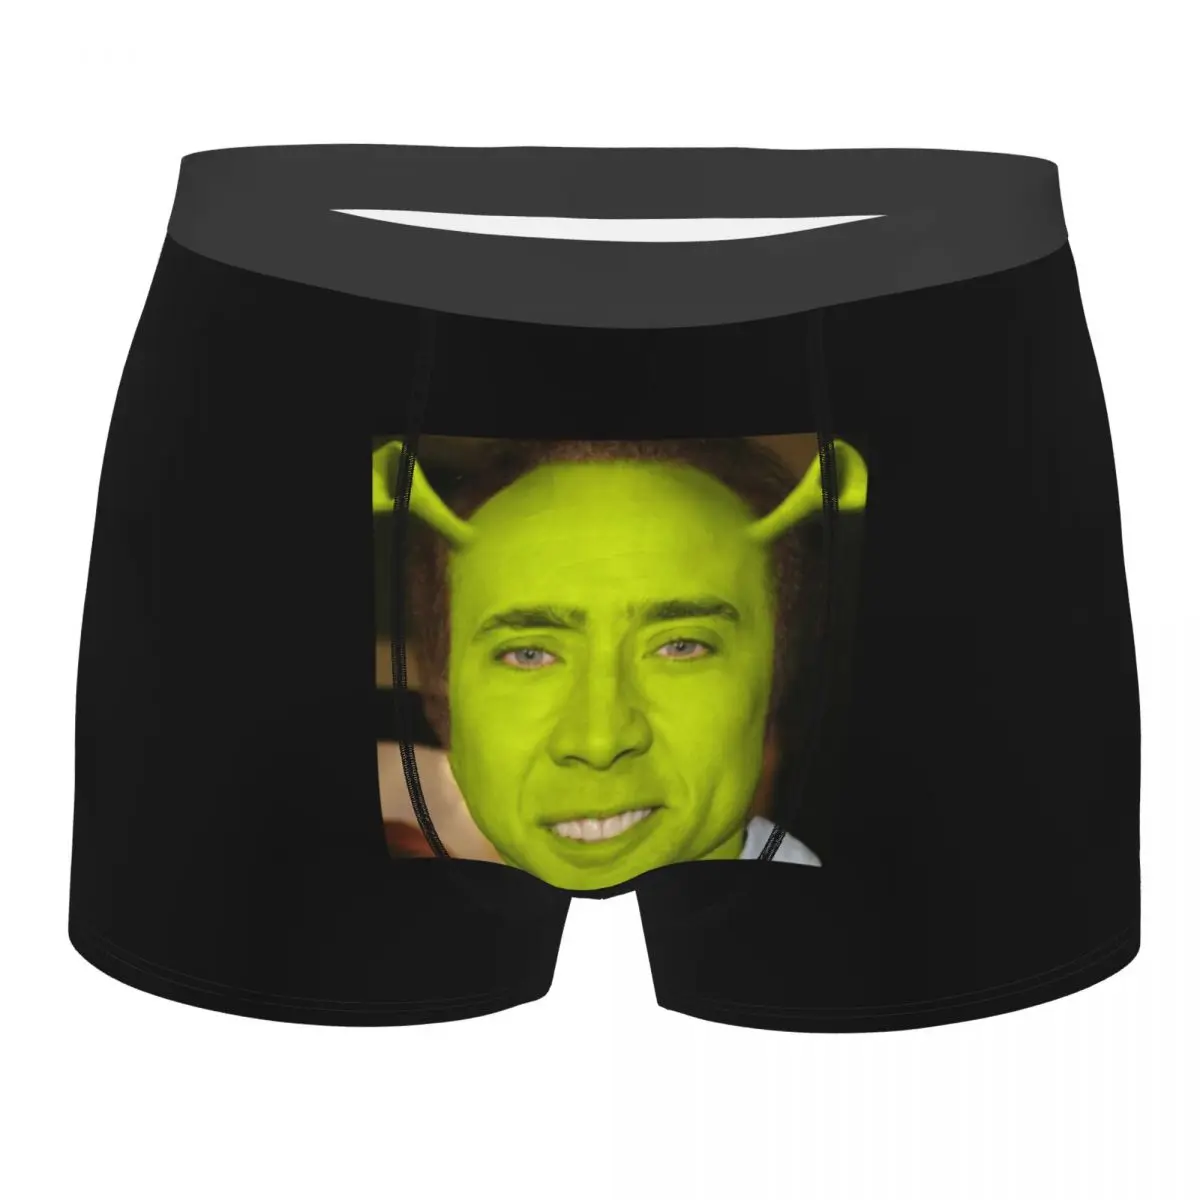 Humor Boxer Shorts Panties Briefs Men's Nicolas Cage Shrek Underwear Funny Meme Picolas Cage Mid Waist Underpants for Male mens boxers Boxers